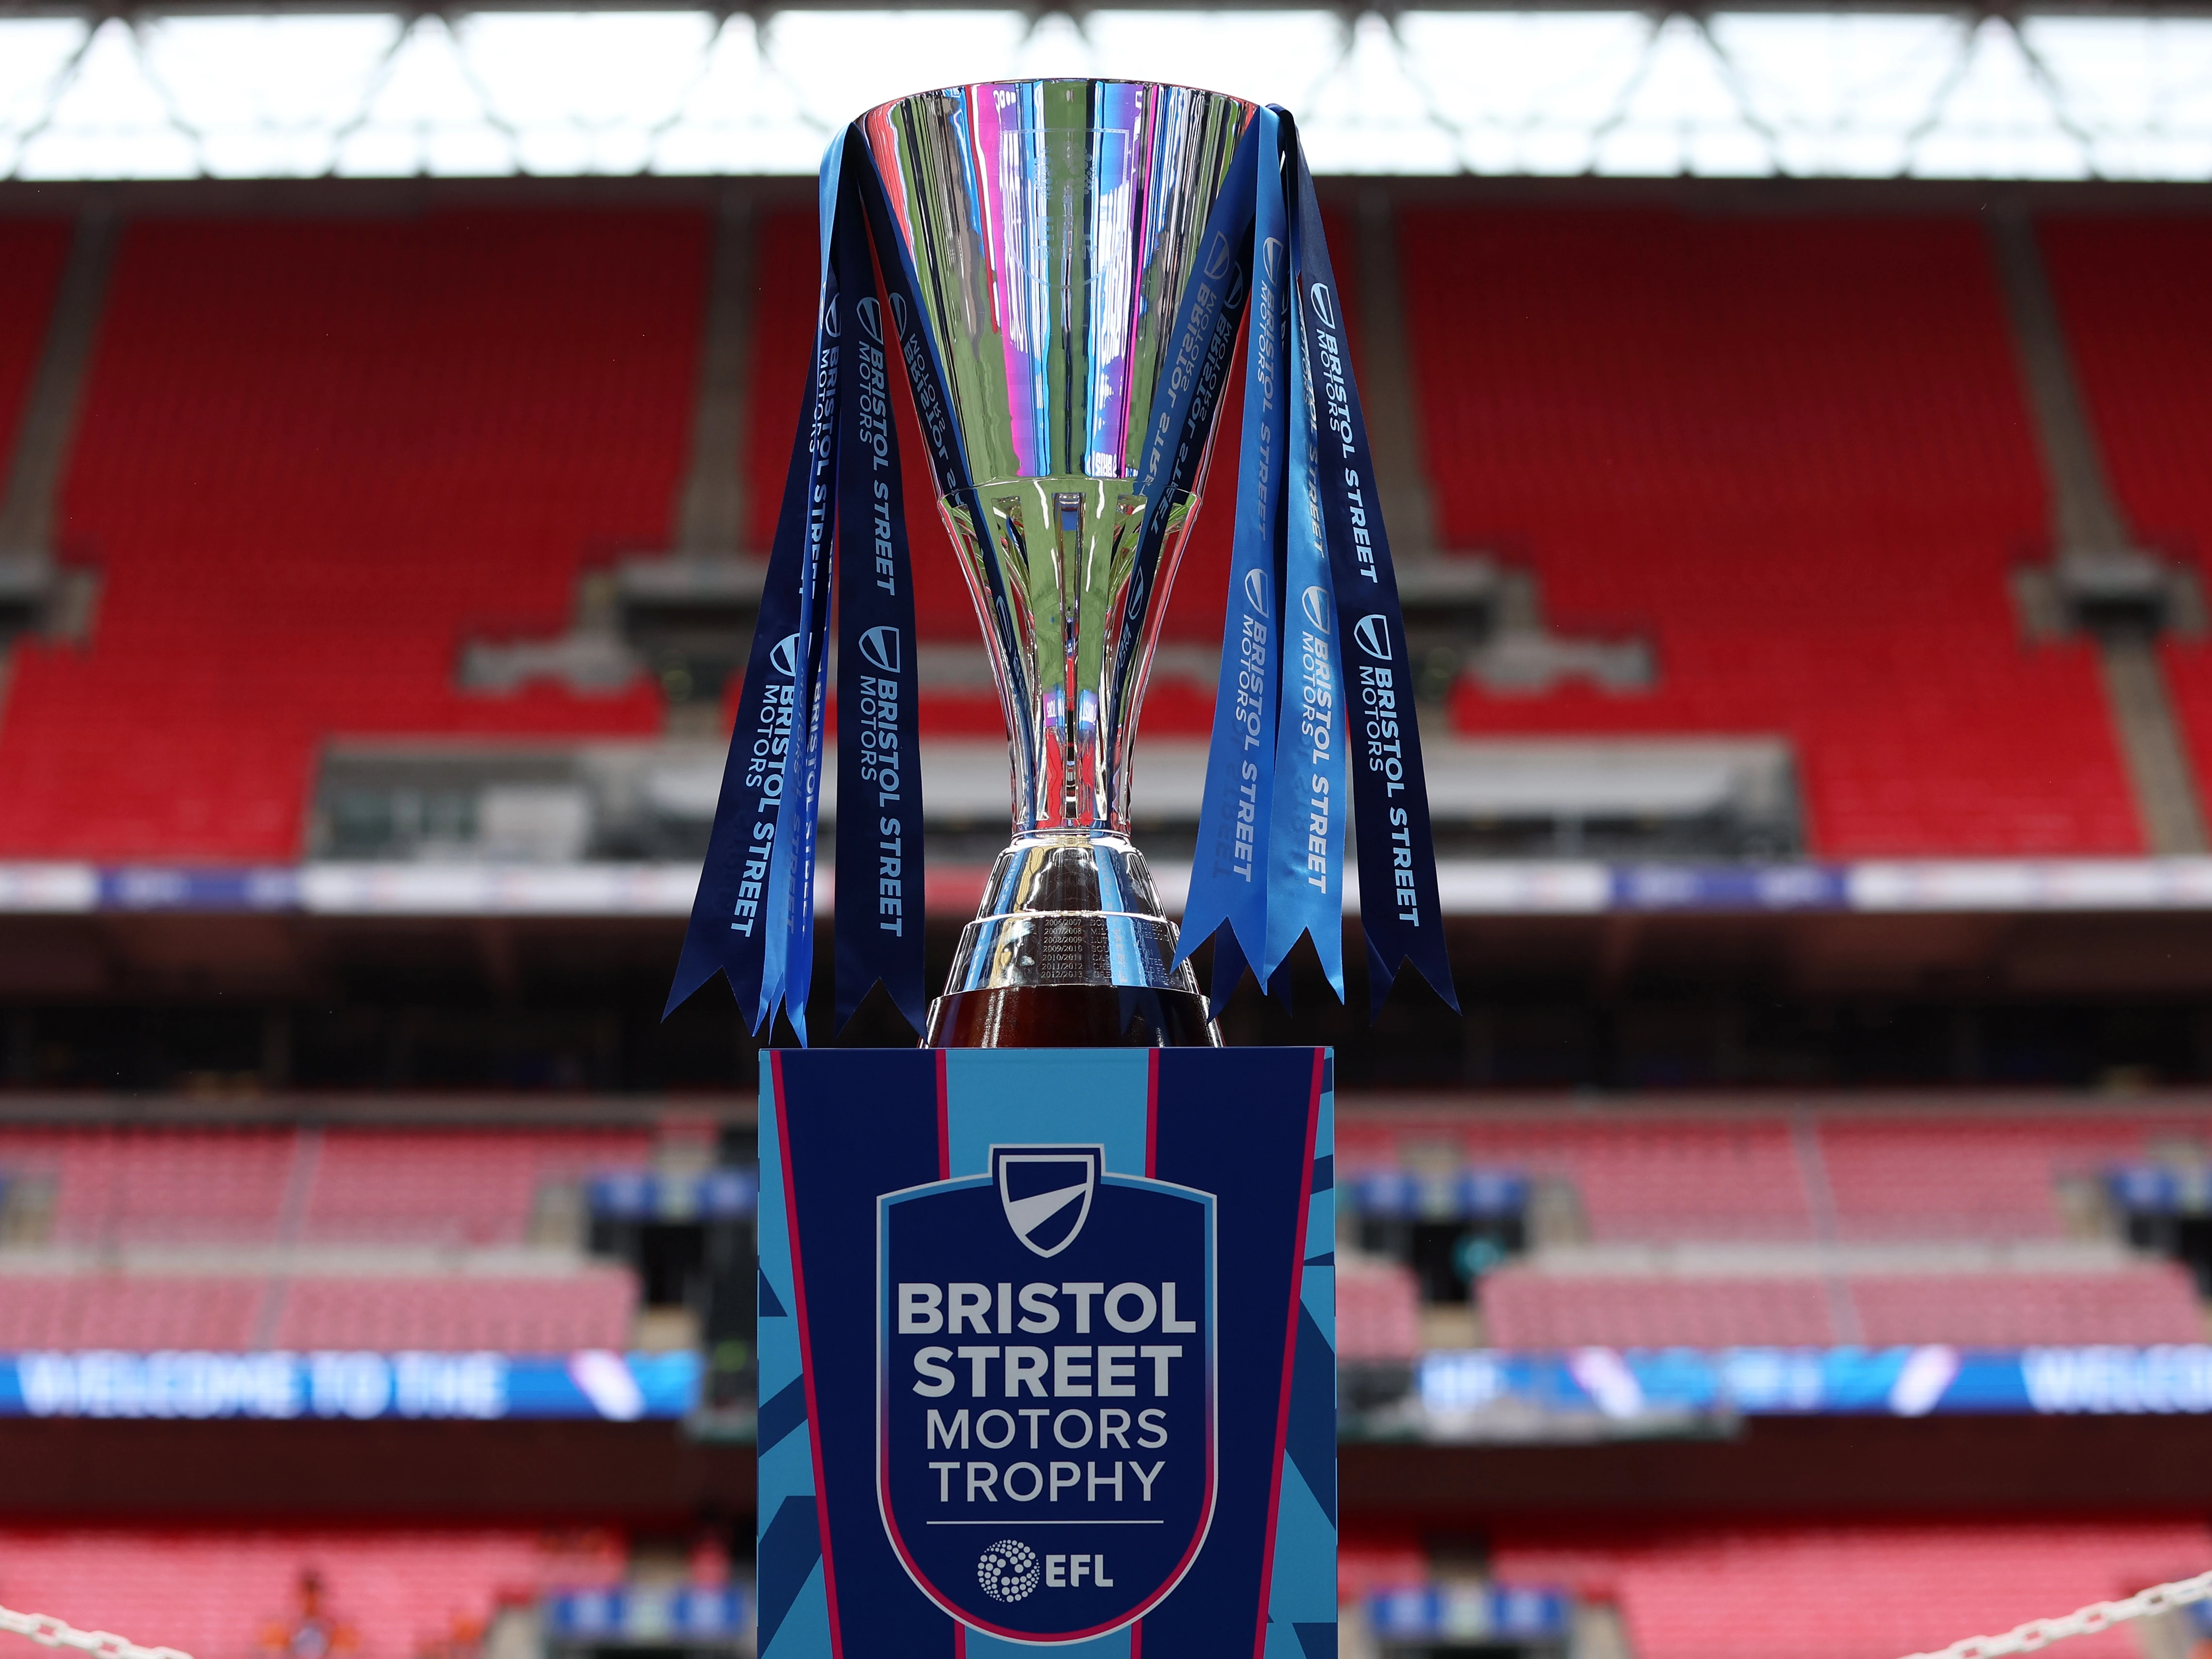 Bristol Street Motors Trophy image 